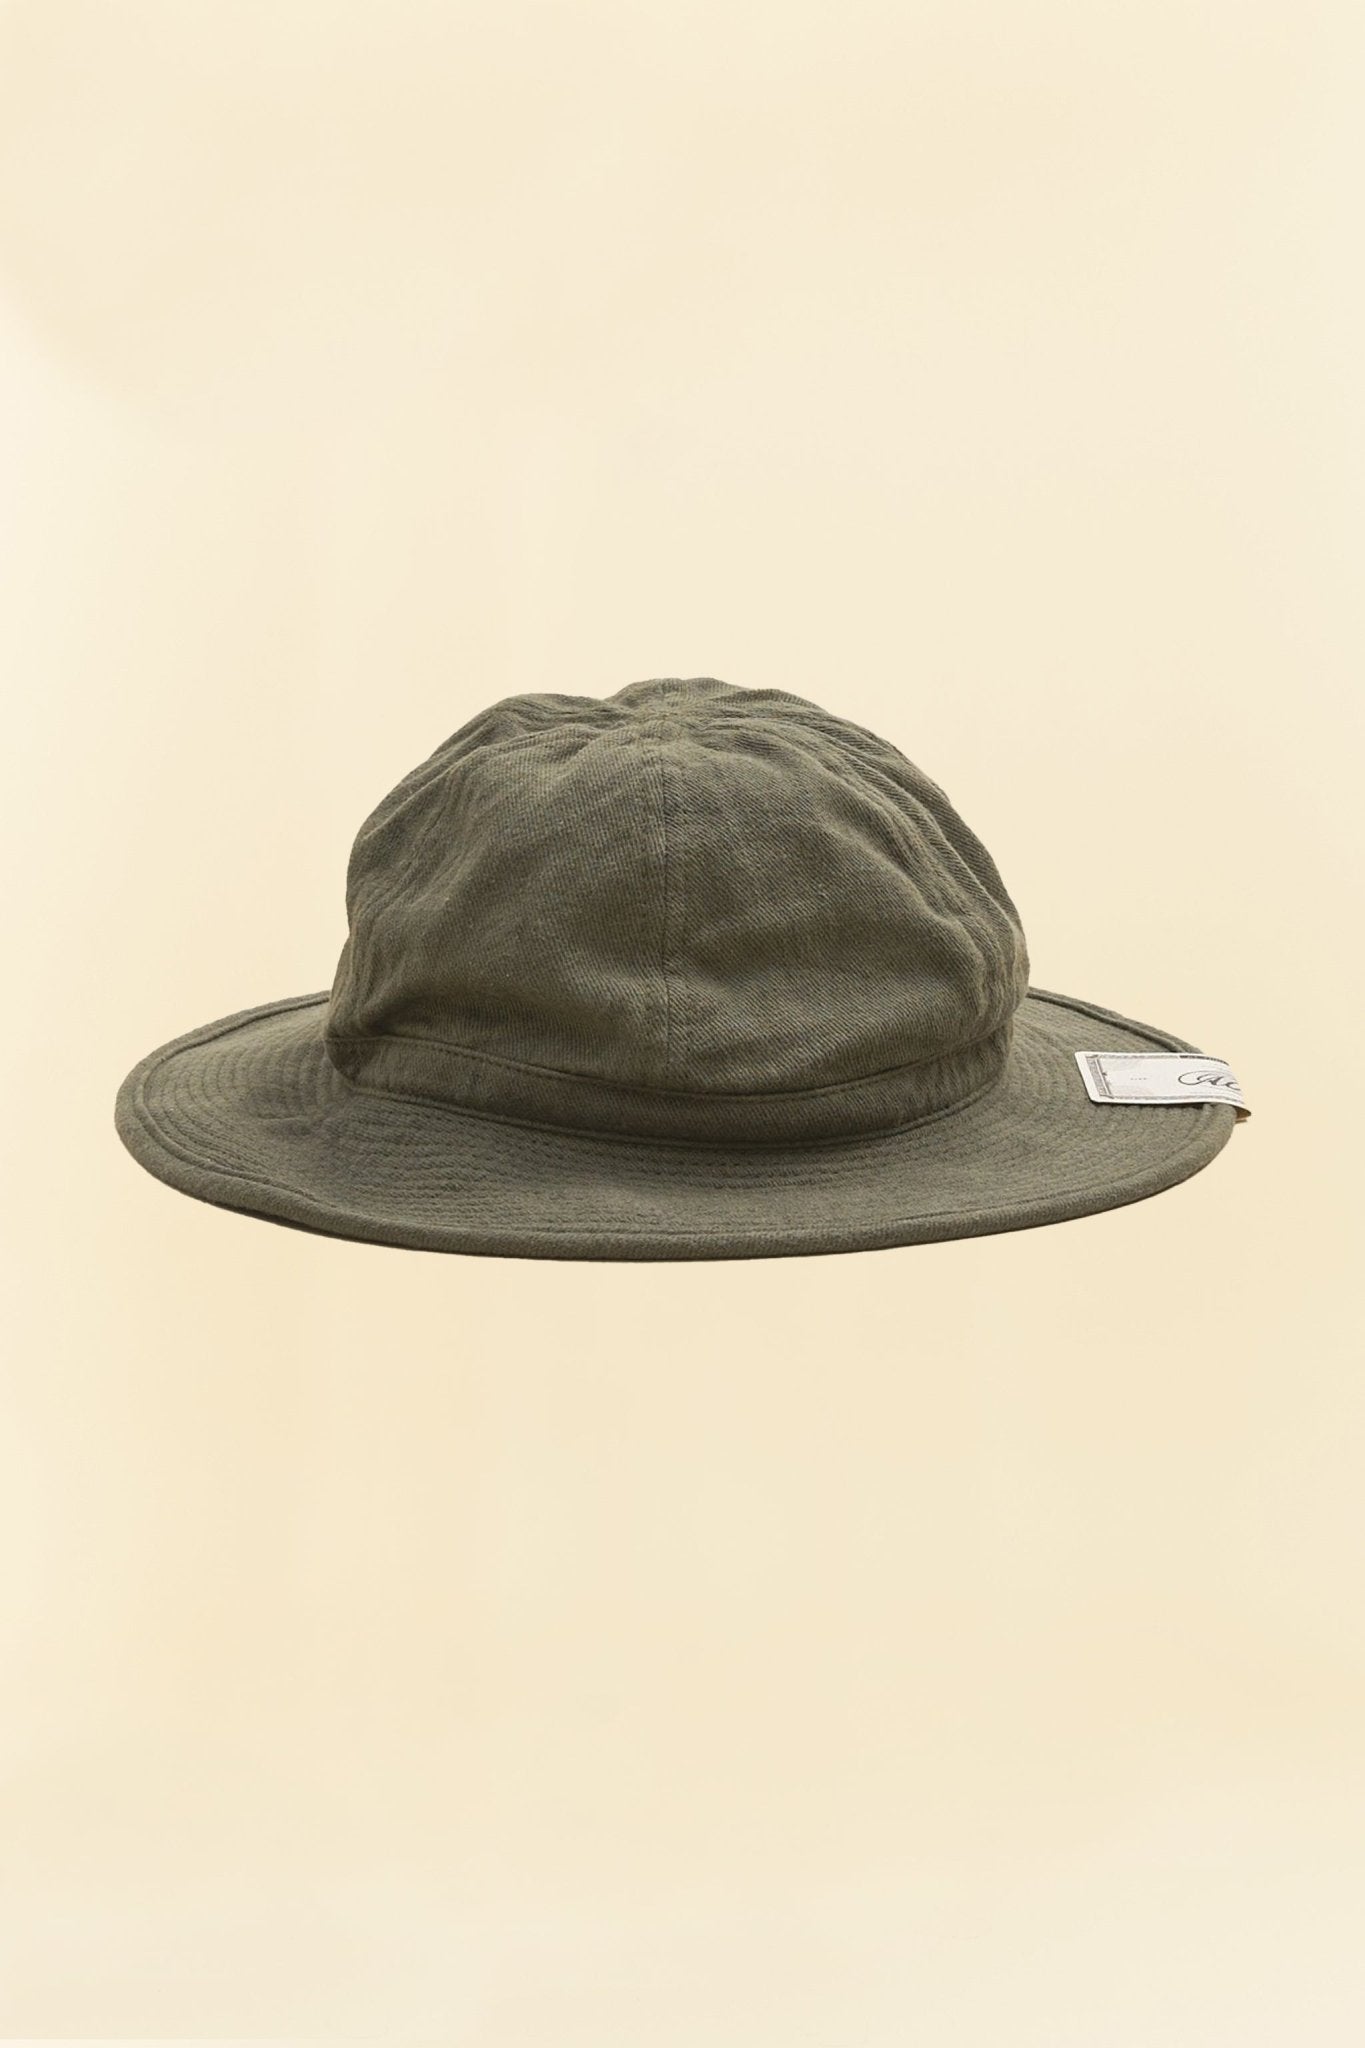 Addict Clothes x HW Dog & Co Linen Fatigue Hat - Army Green -Addict Clothes - URAHARA